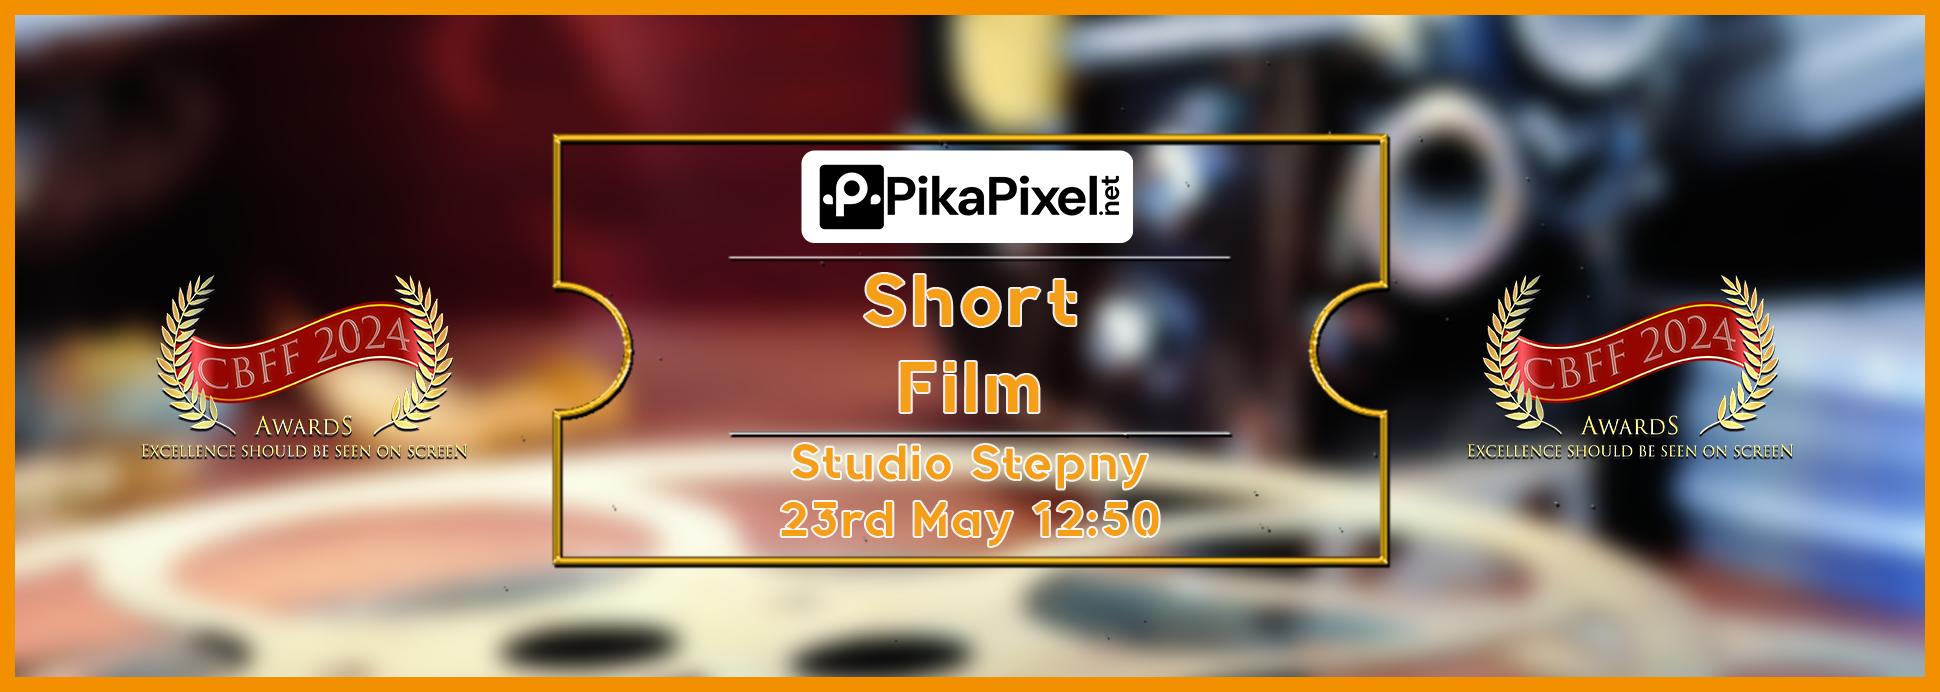 Thursday 23rd 12:50 Studio Stepny Short Film